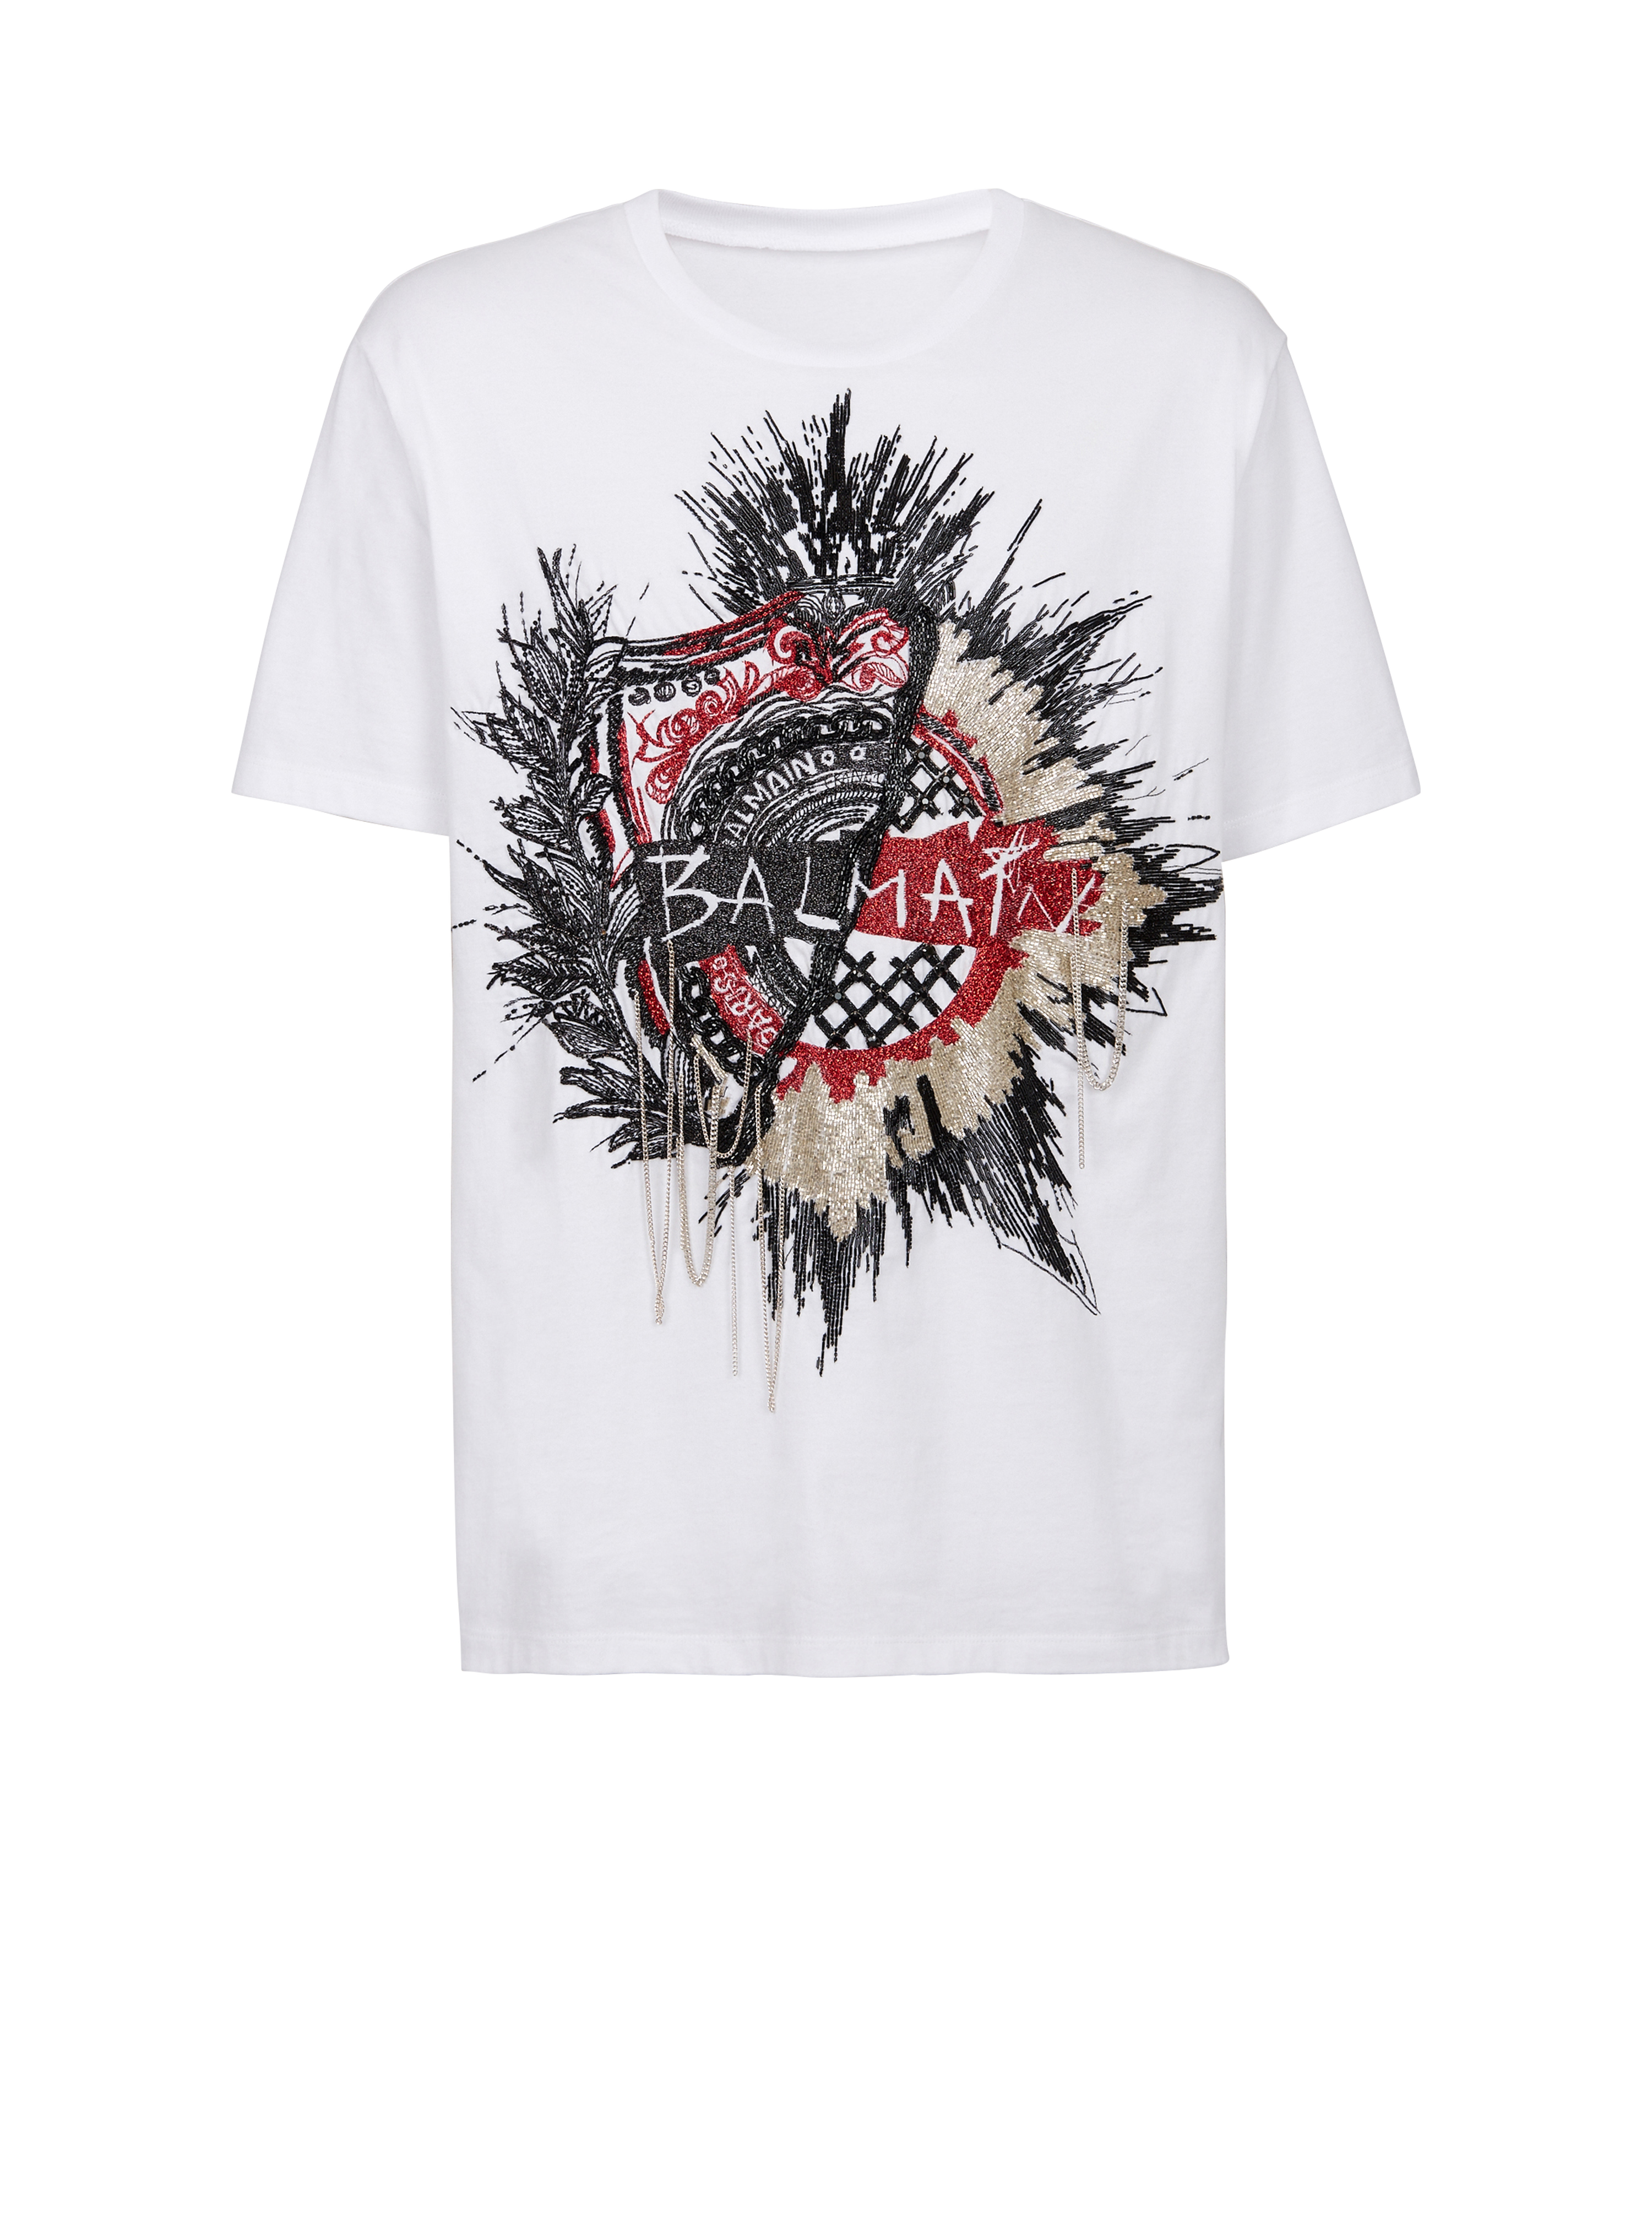 T-shirt oversize en coton brodé logo Balmain, blanc